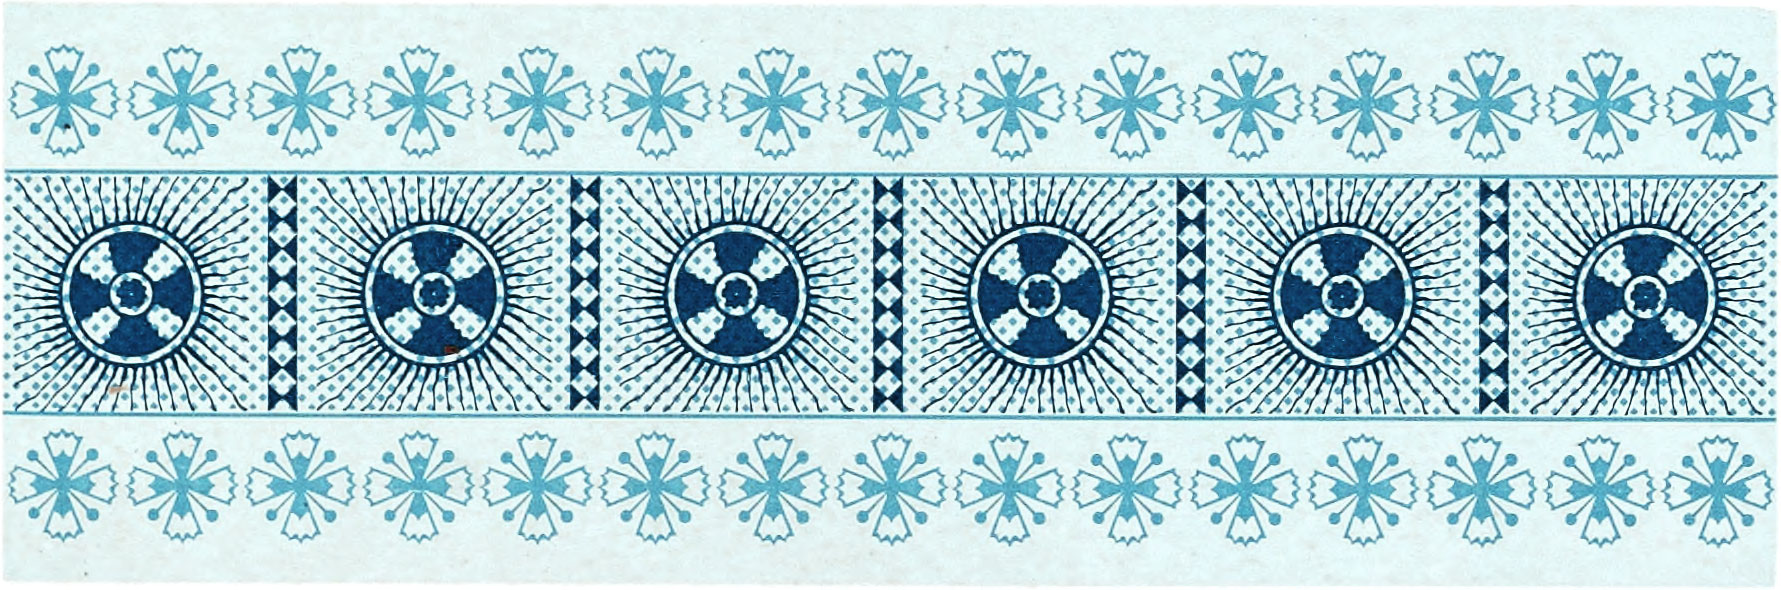 Ornate border comprising shades of blue